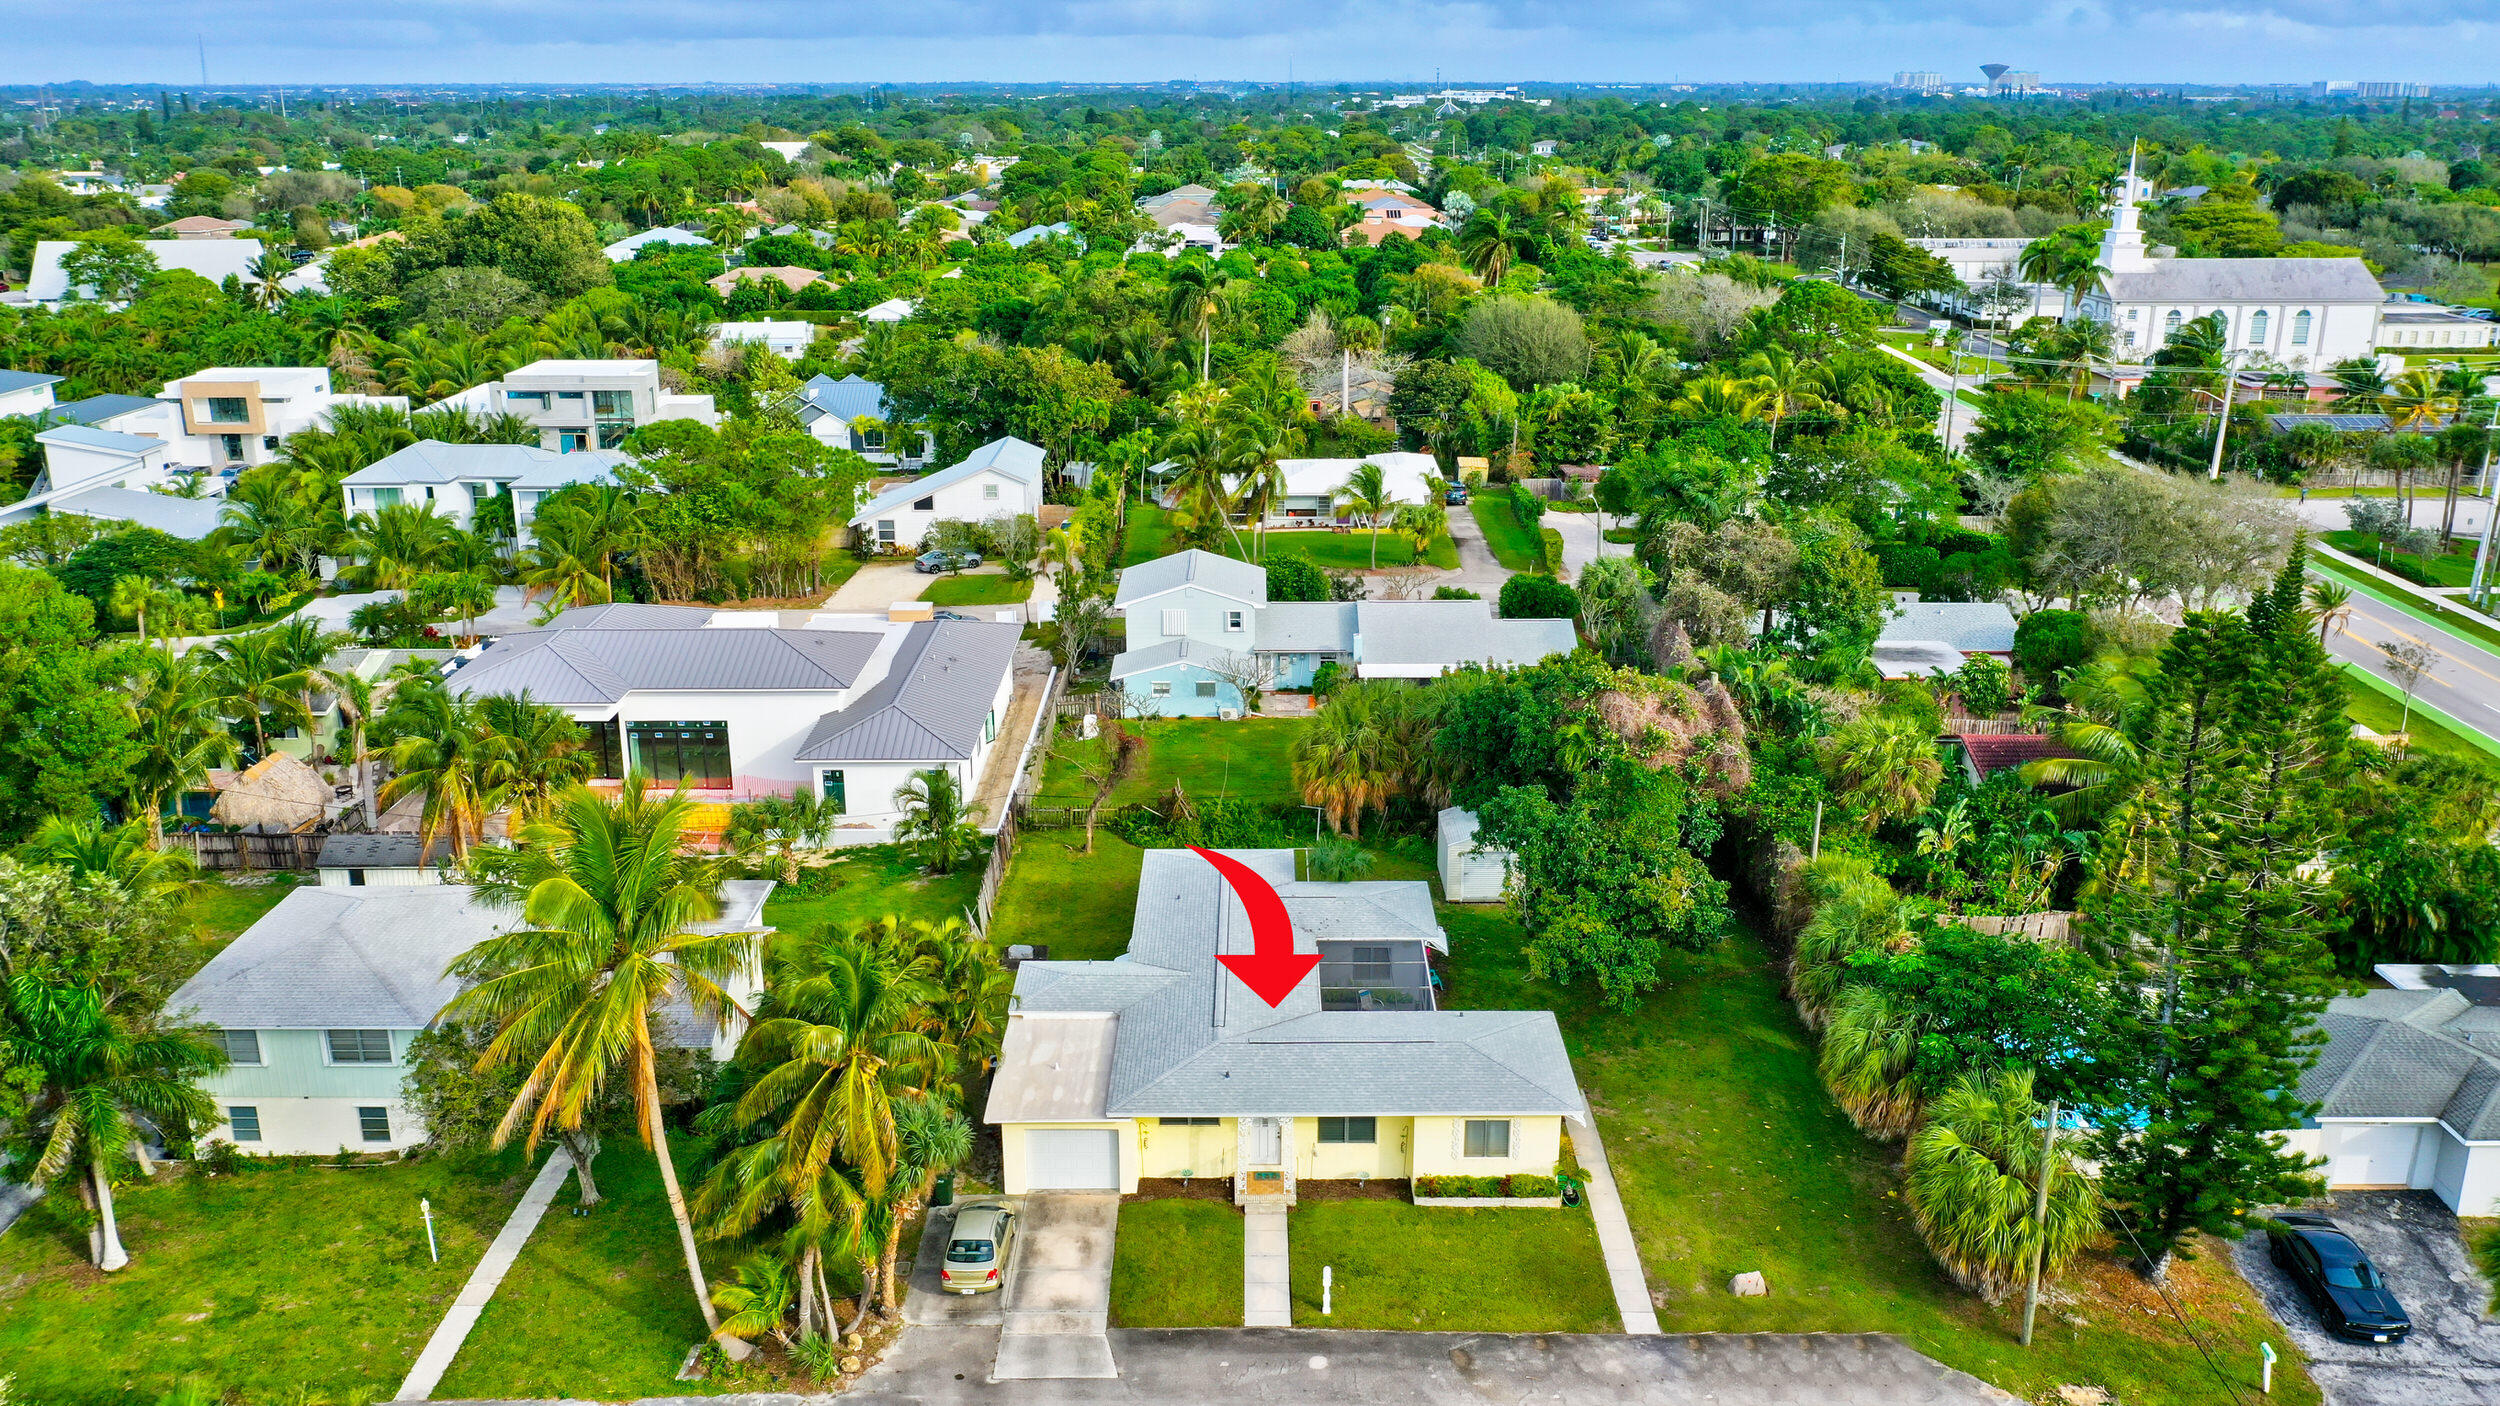 Property for Sale at 109 Avocado Road, Delray Beach, Palm Beach County, Florida - Bedrooms: 3 
Bathrooms: 2  - $980,000